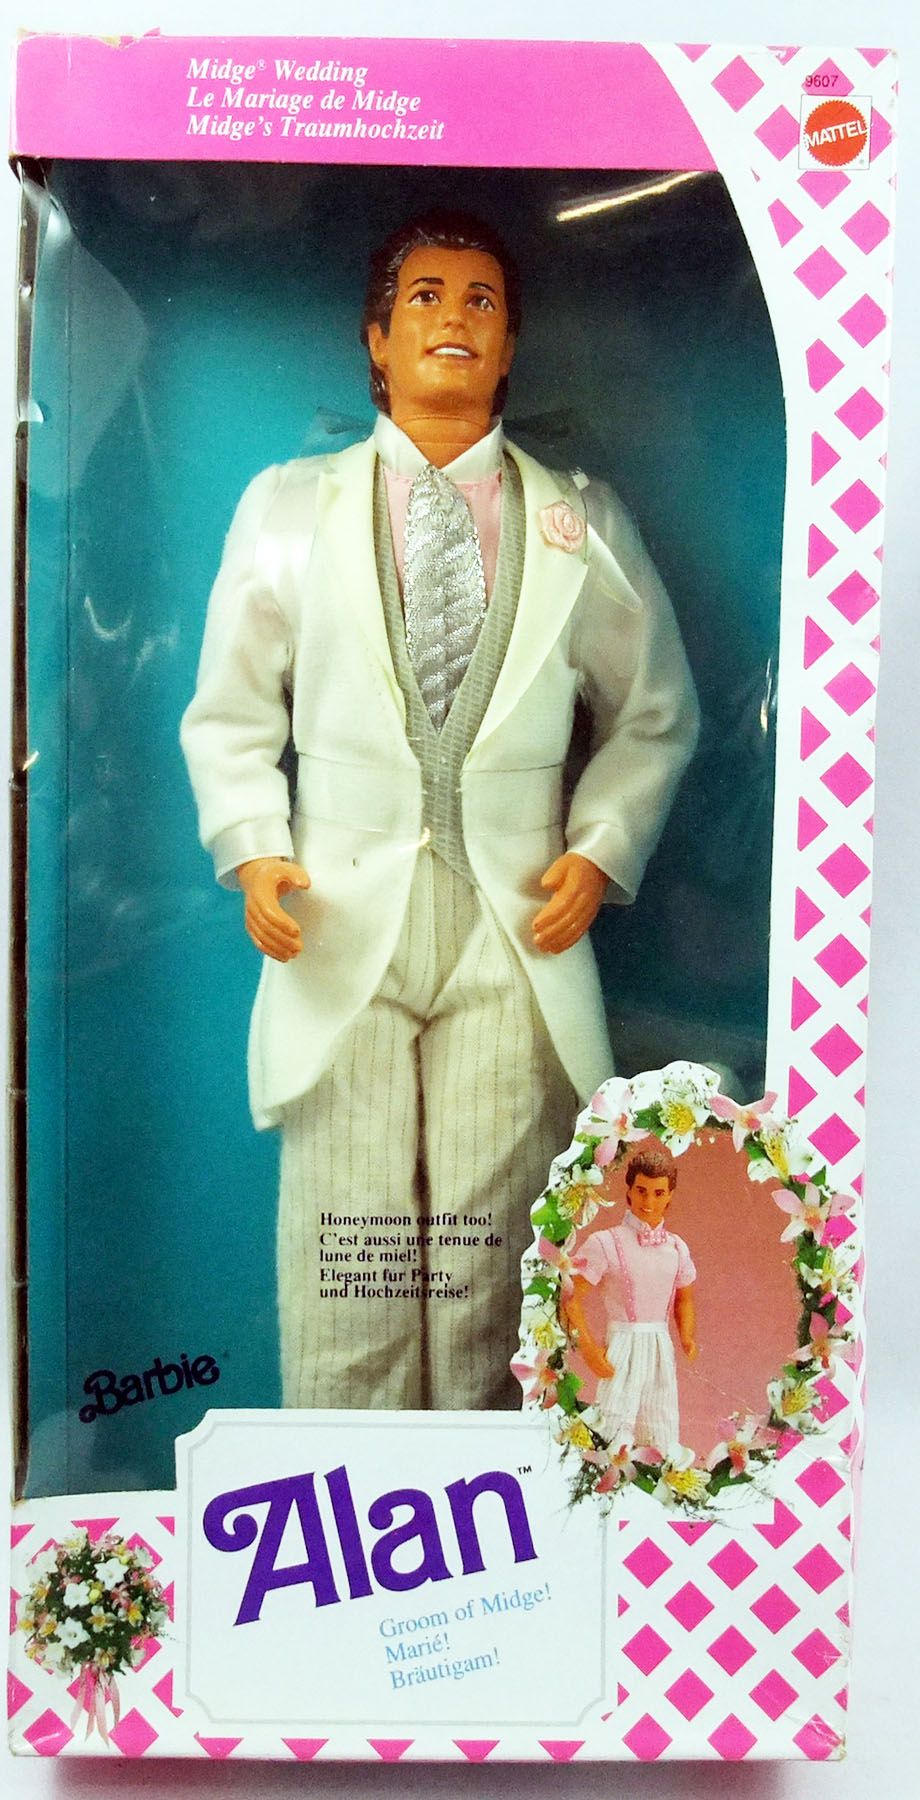 Barbie Midge Wedding Alan Groom of Midge - Mattel 1990 (ref.9607)